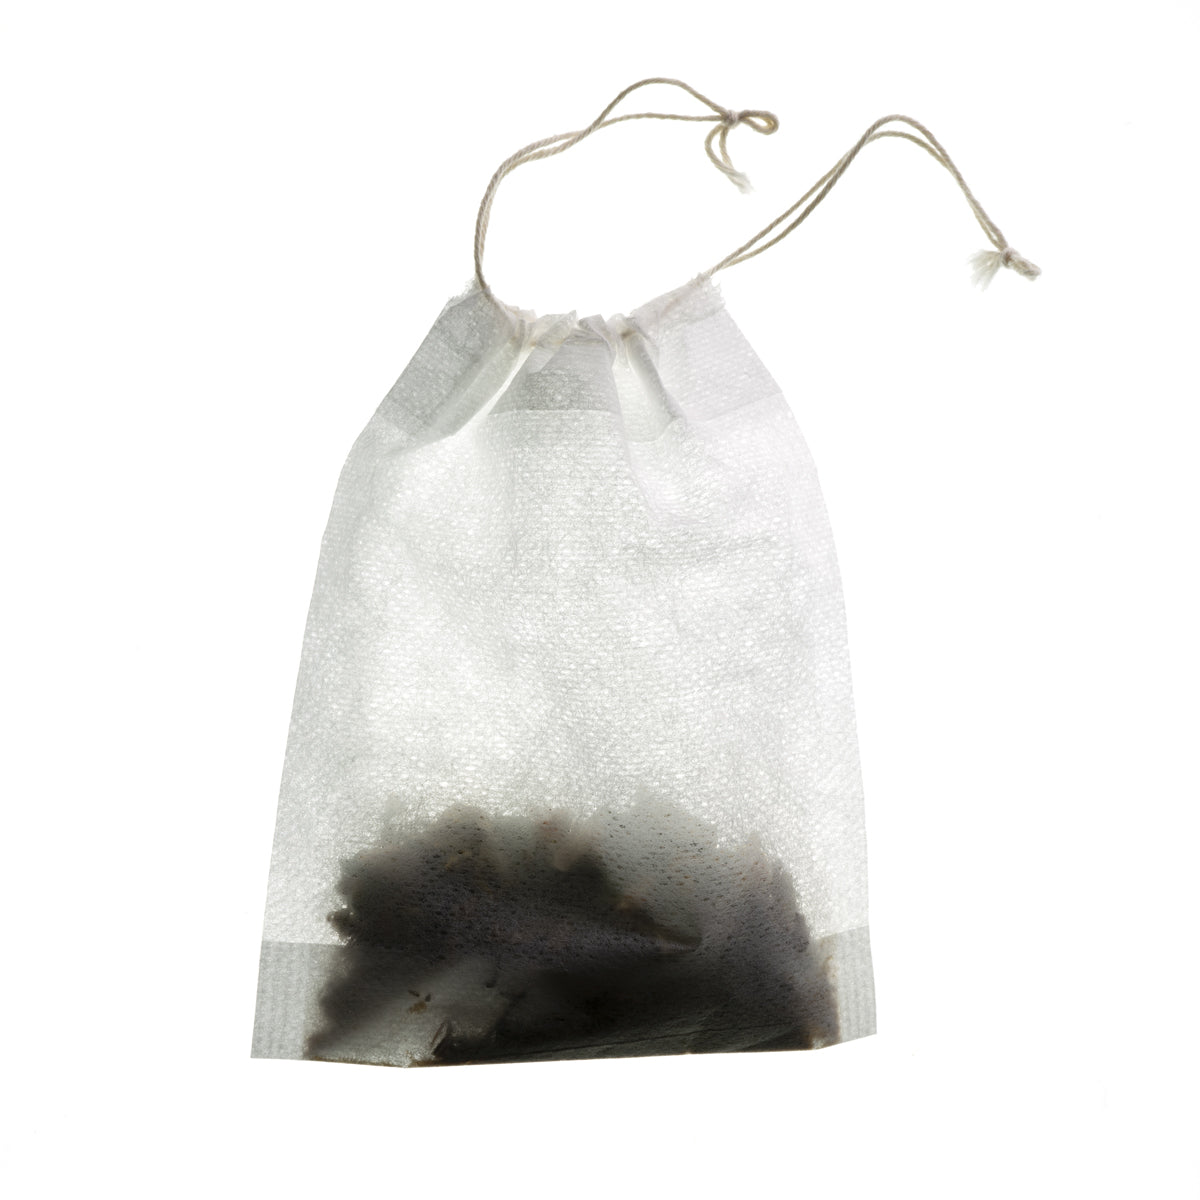  Single tea bag of FOCUS 10AM tea by noosha